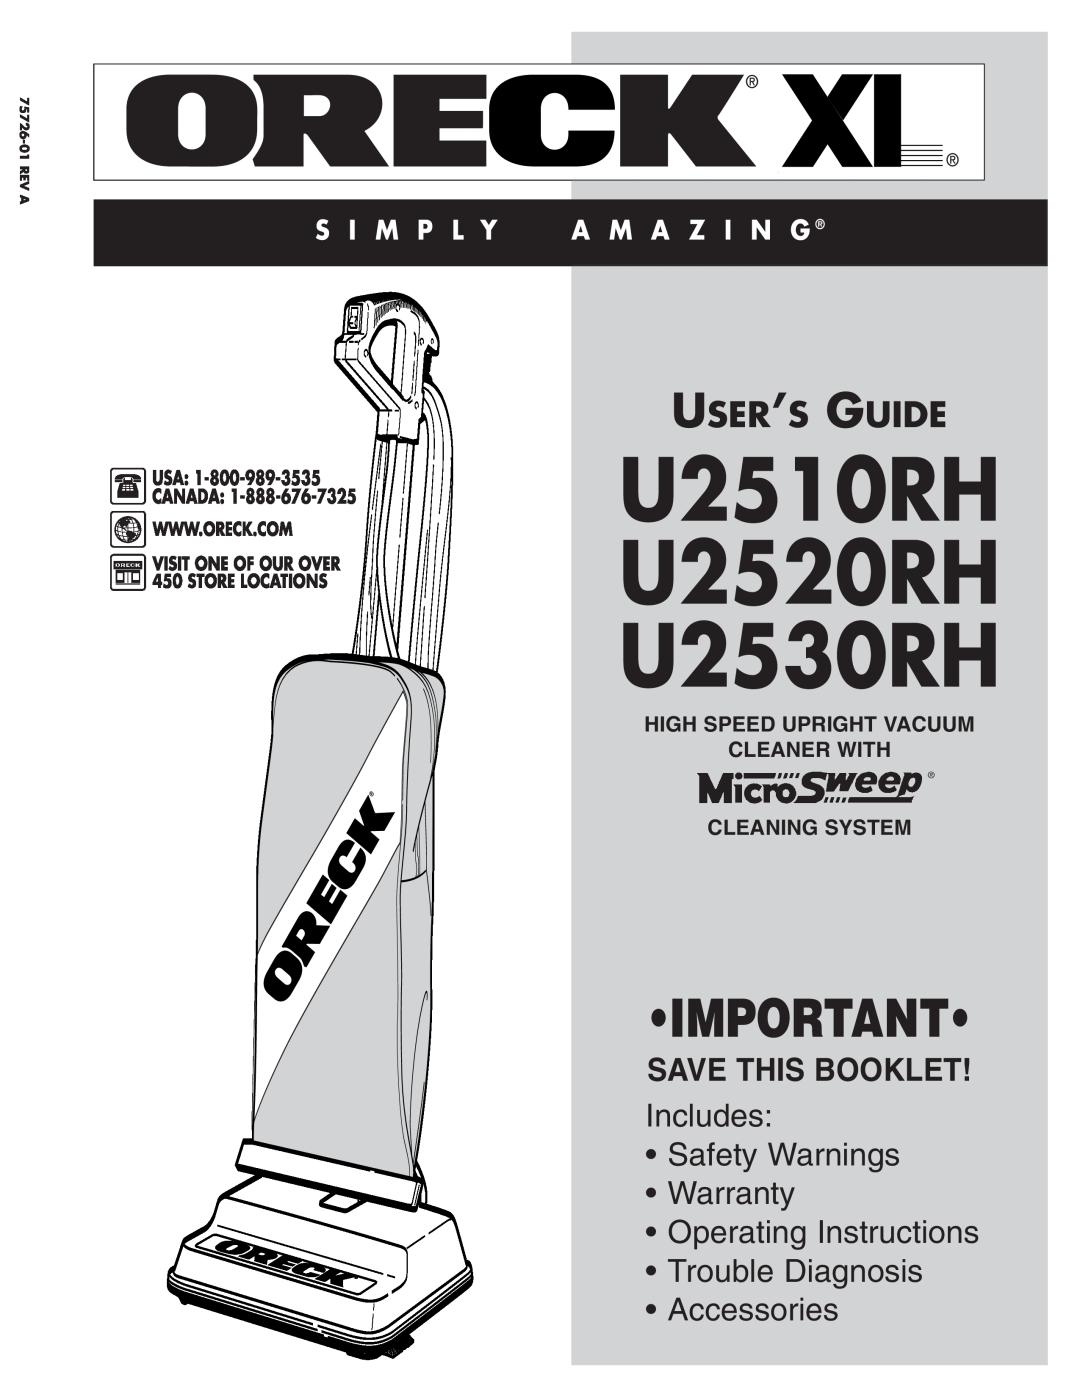 Oreck warranty High Speed Upright Vacuum Cleaner With, Cleaning System, U2510RH U2520RH U2530RH, User’S Guide 